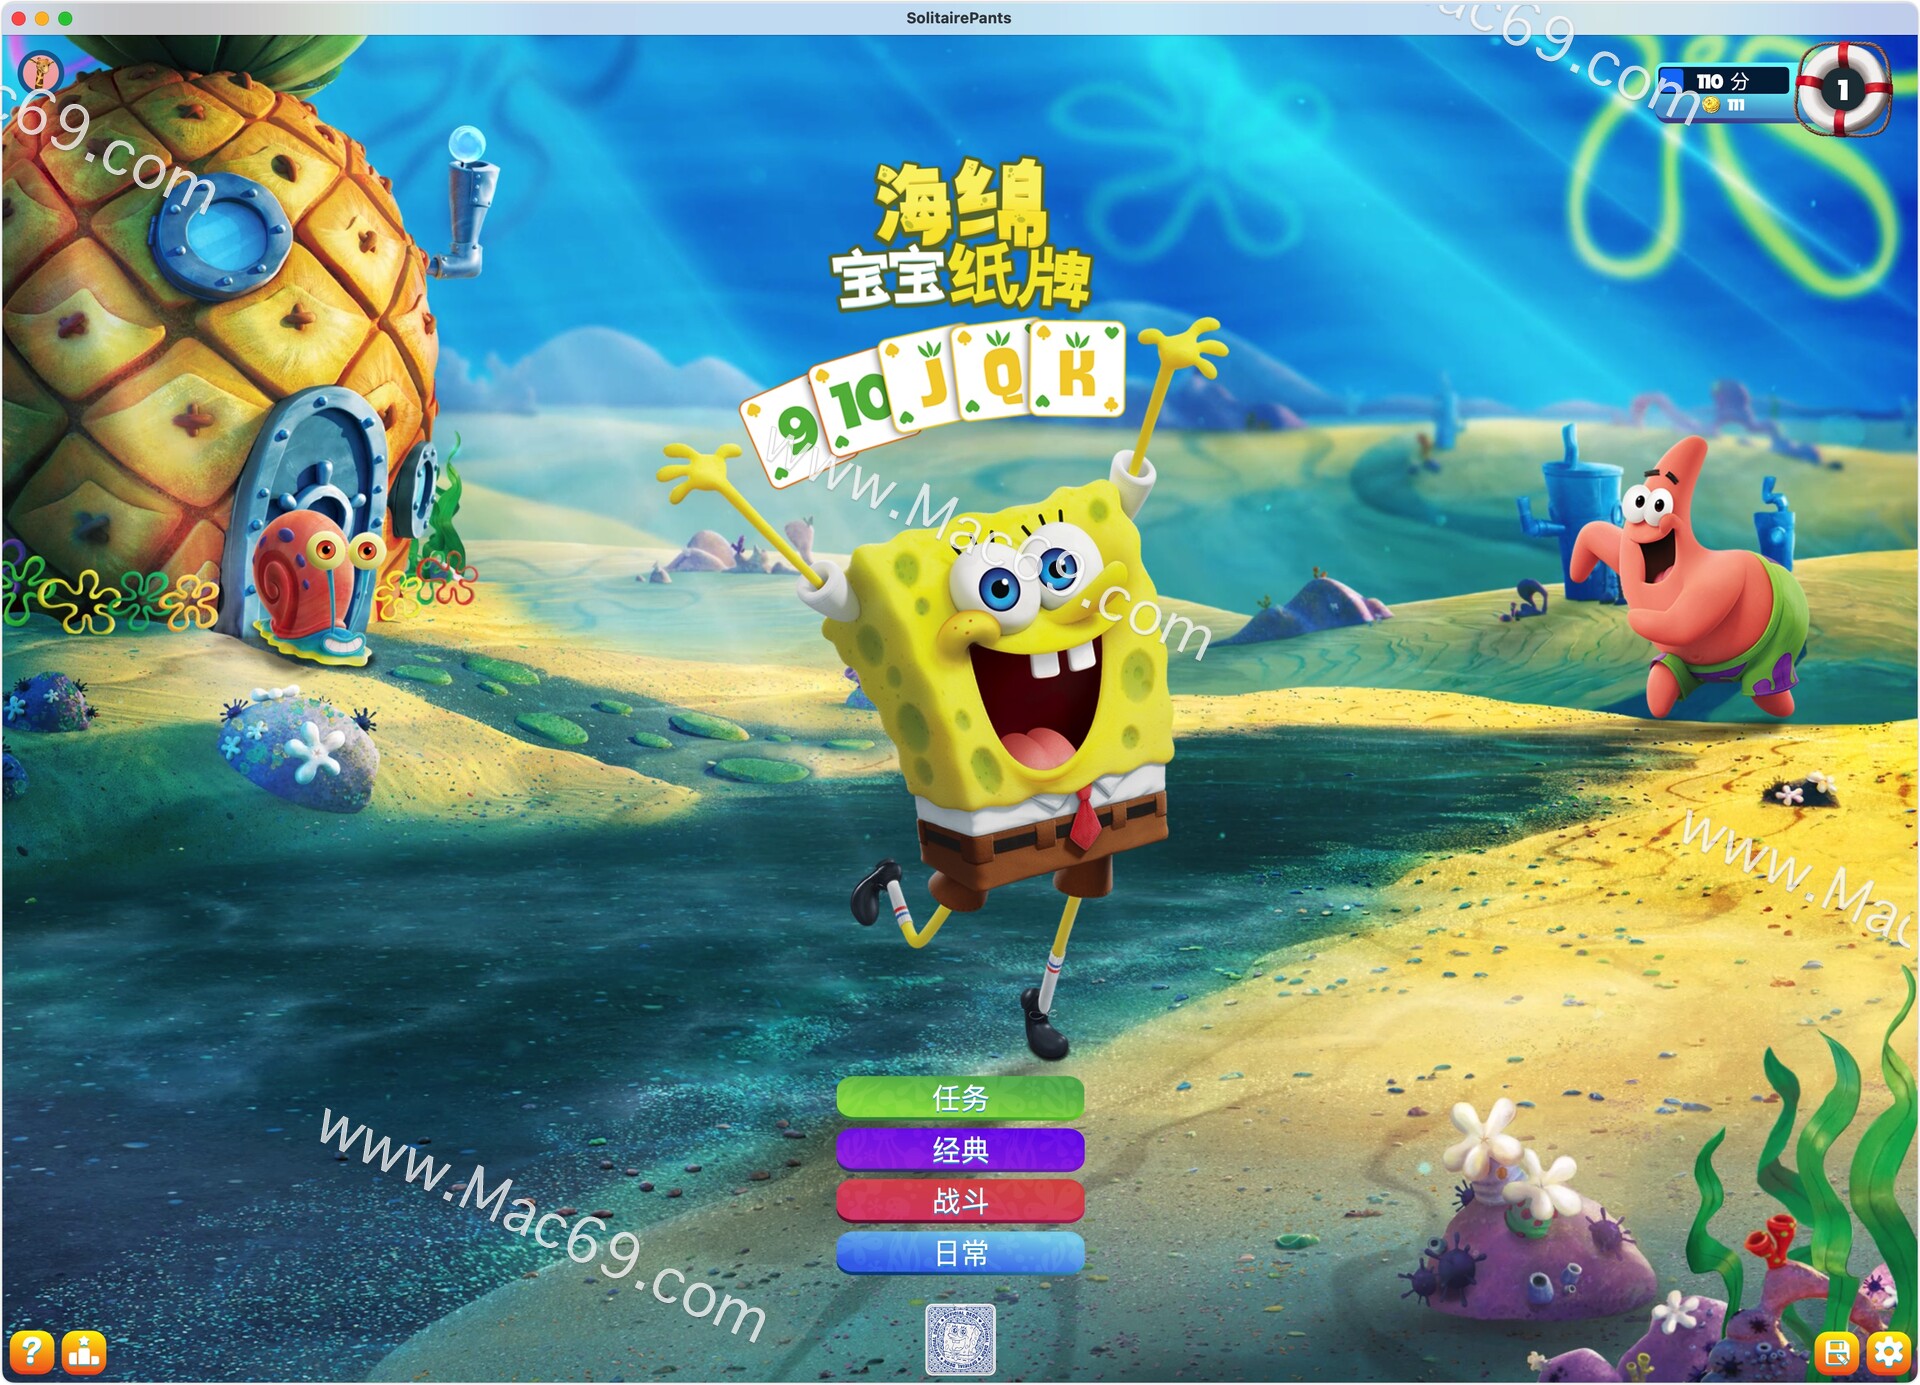 SpongeBob SolitairePants Mac(海绵宝宝纸牌游戏)原生版